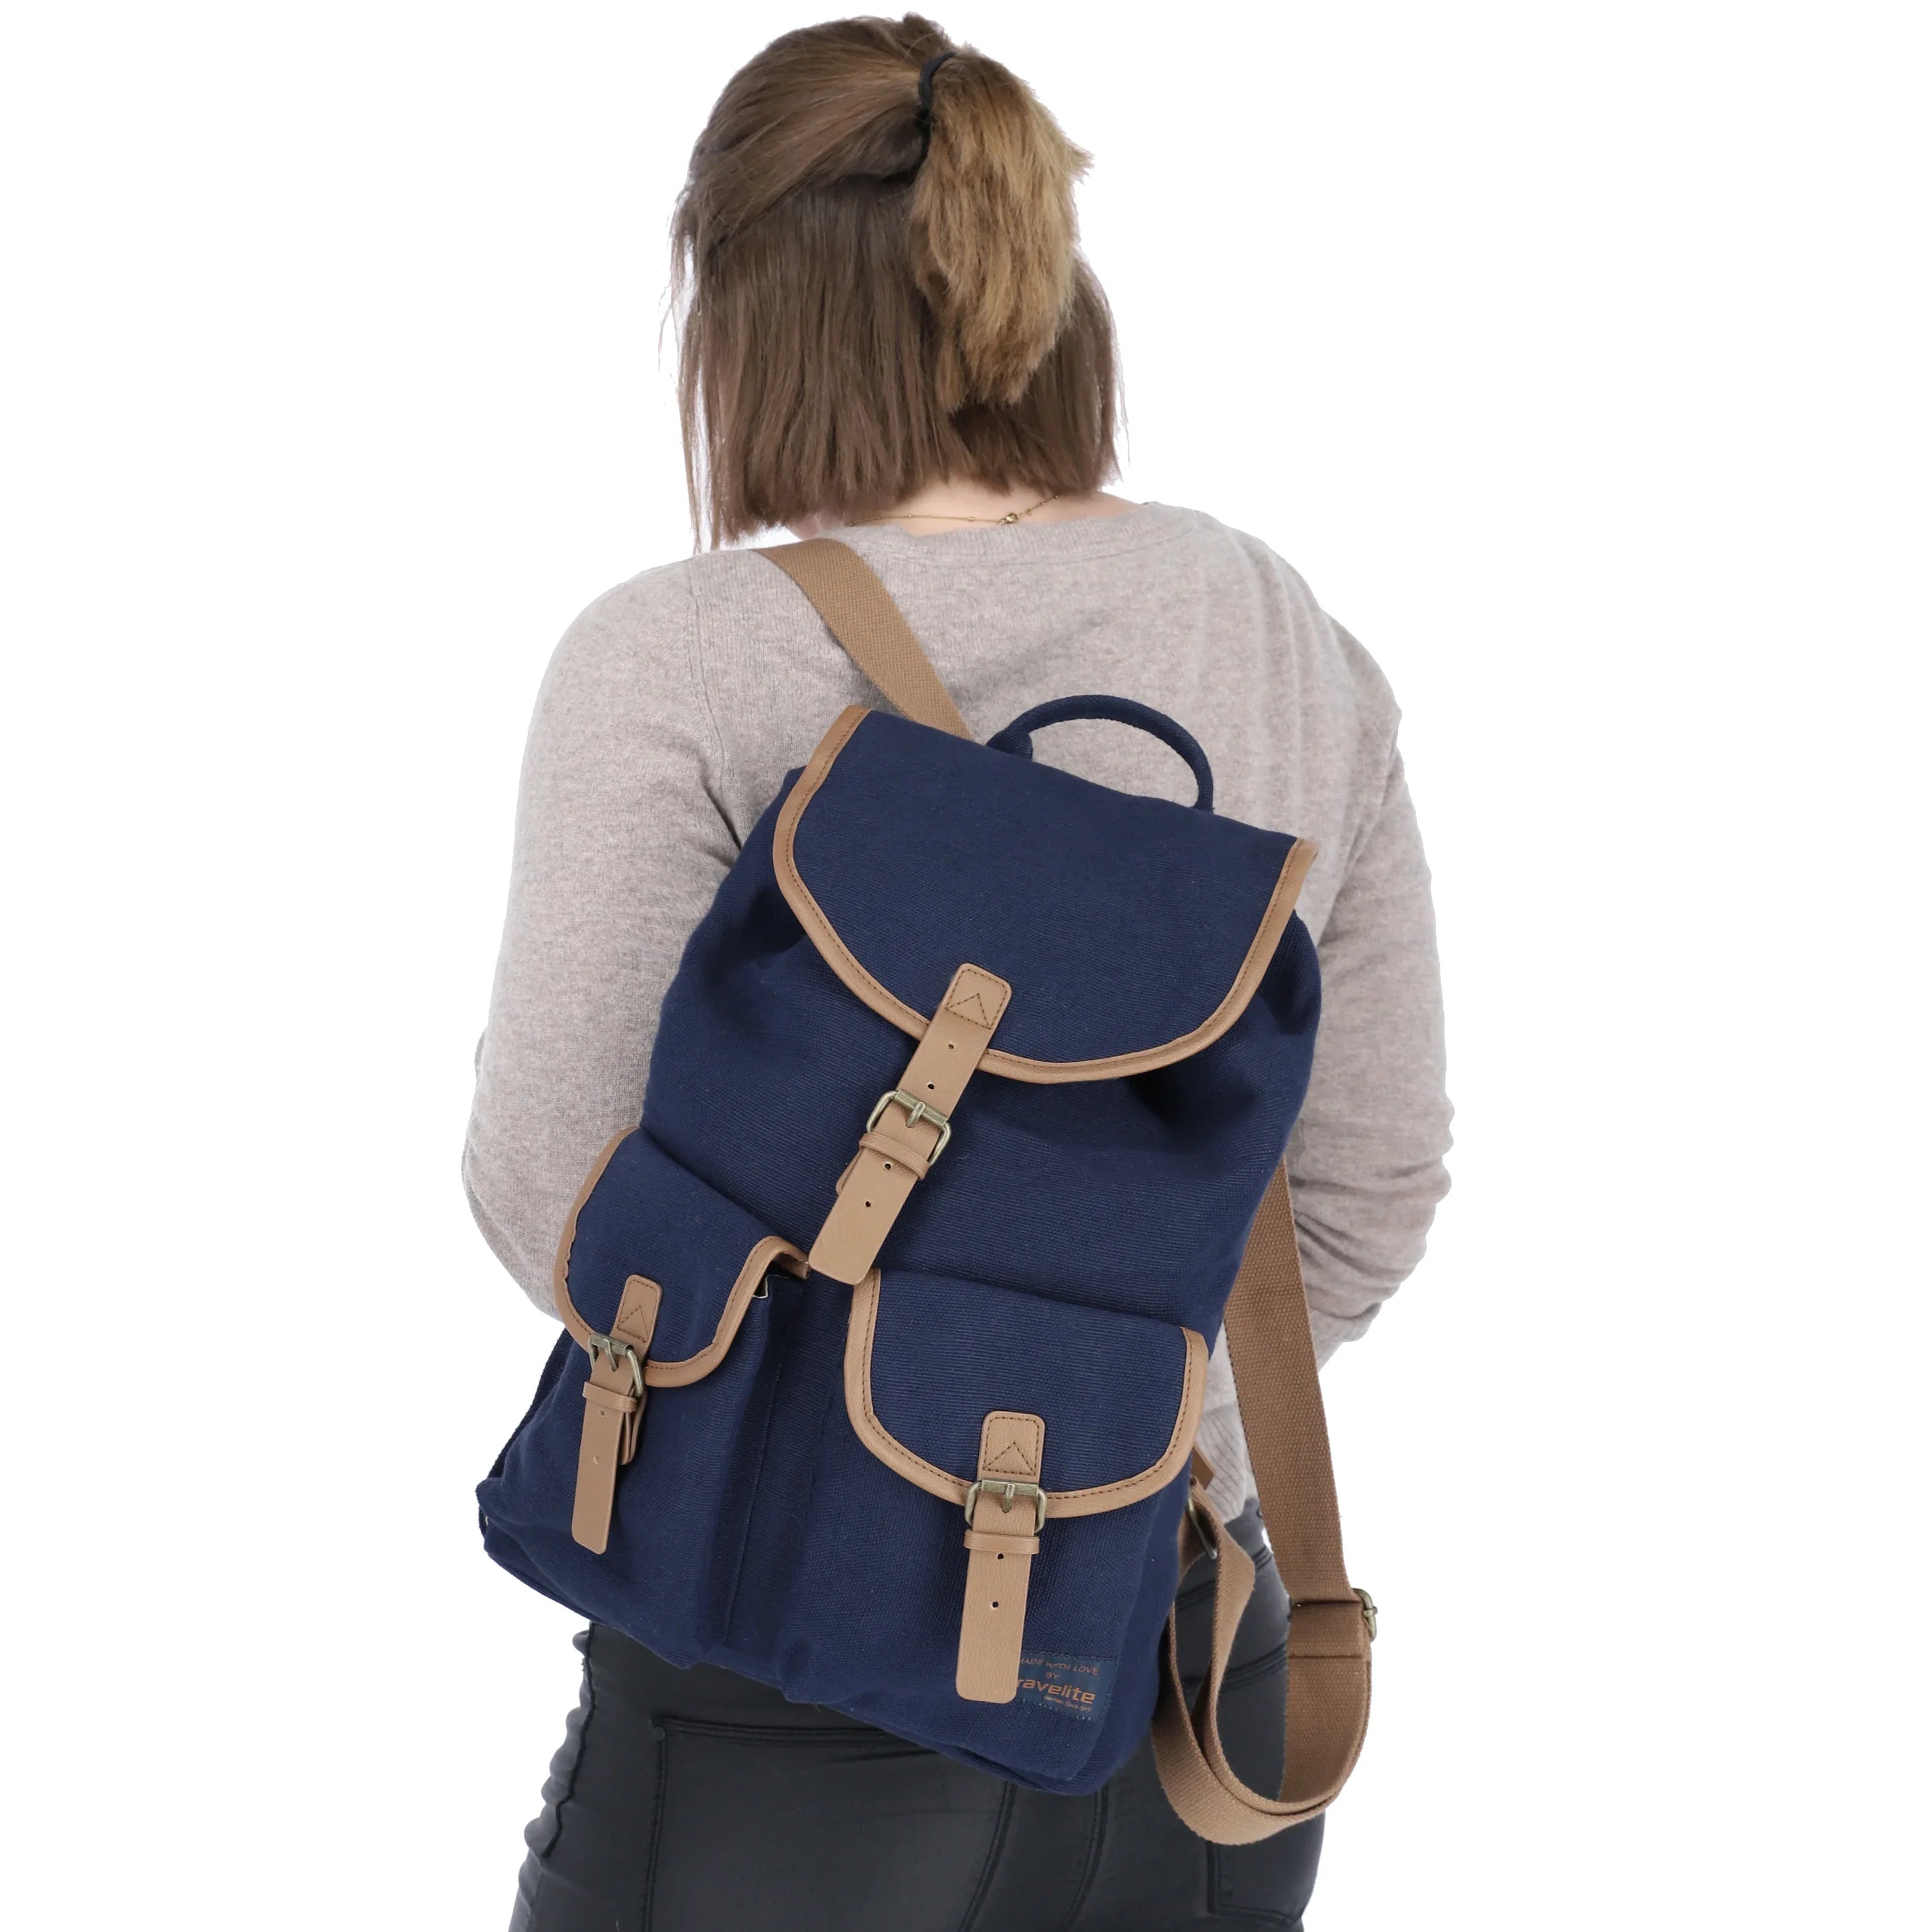 Travelite Hempline flap backpack 38 cm - nature